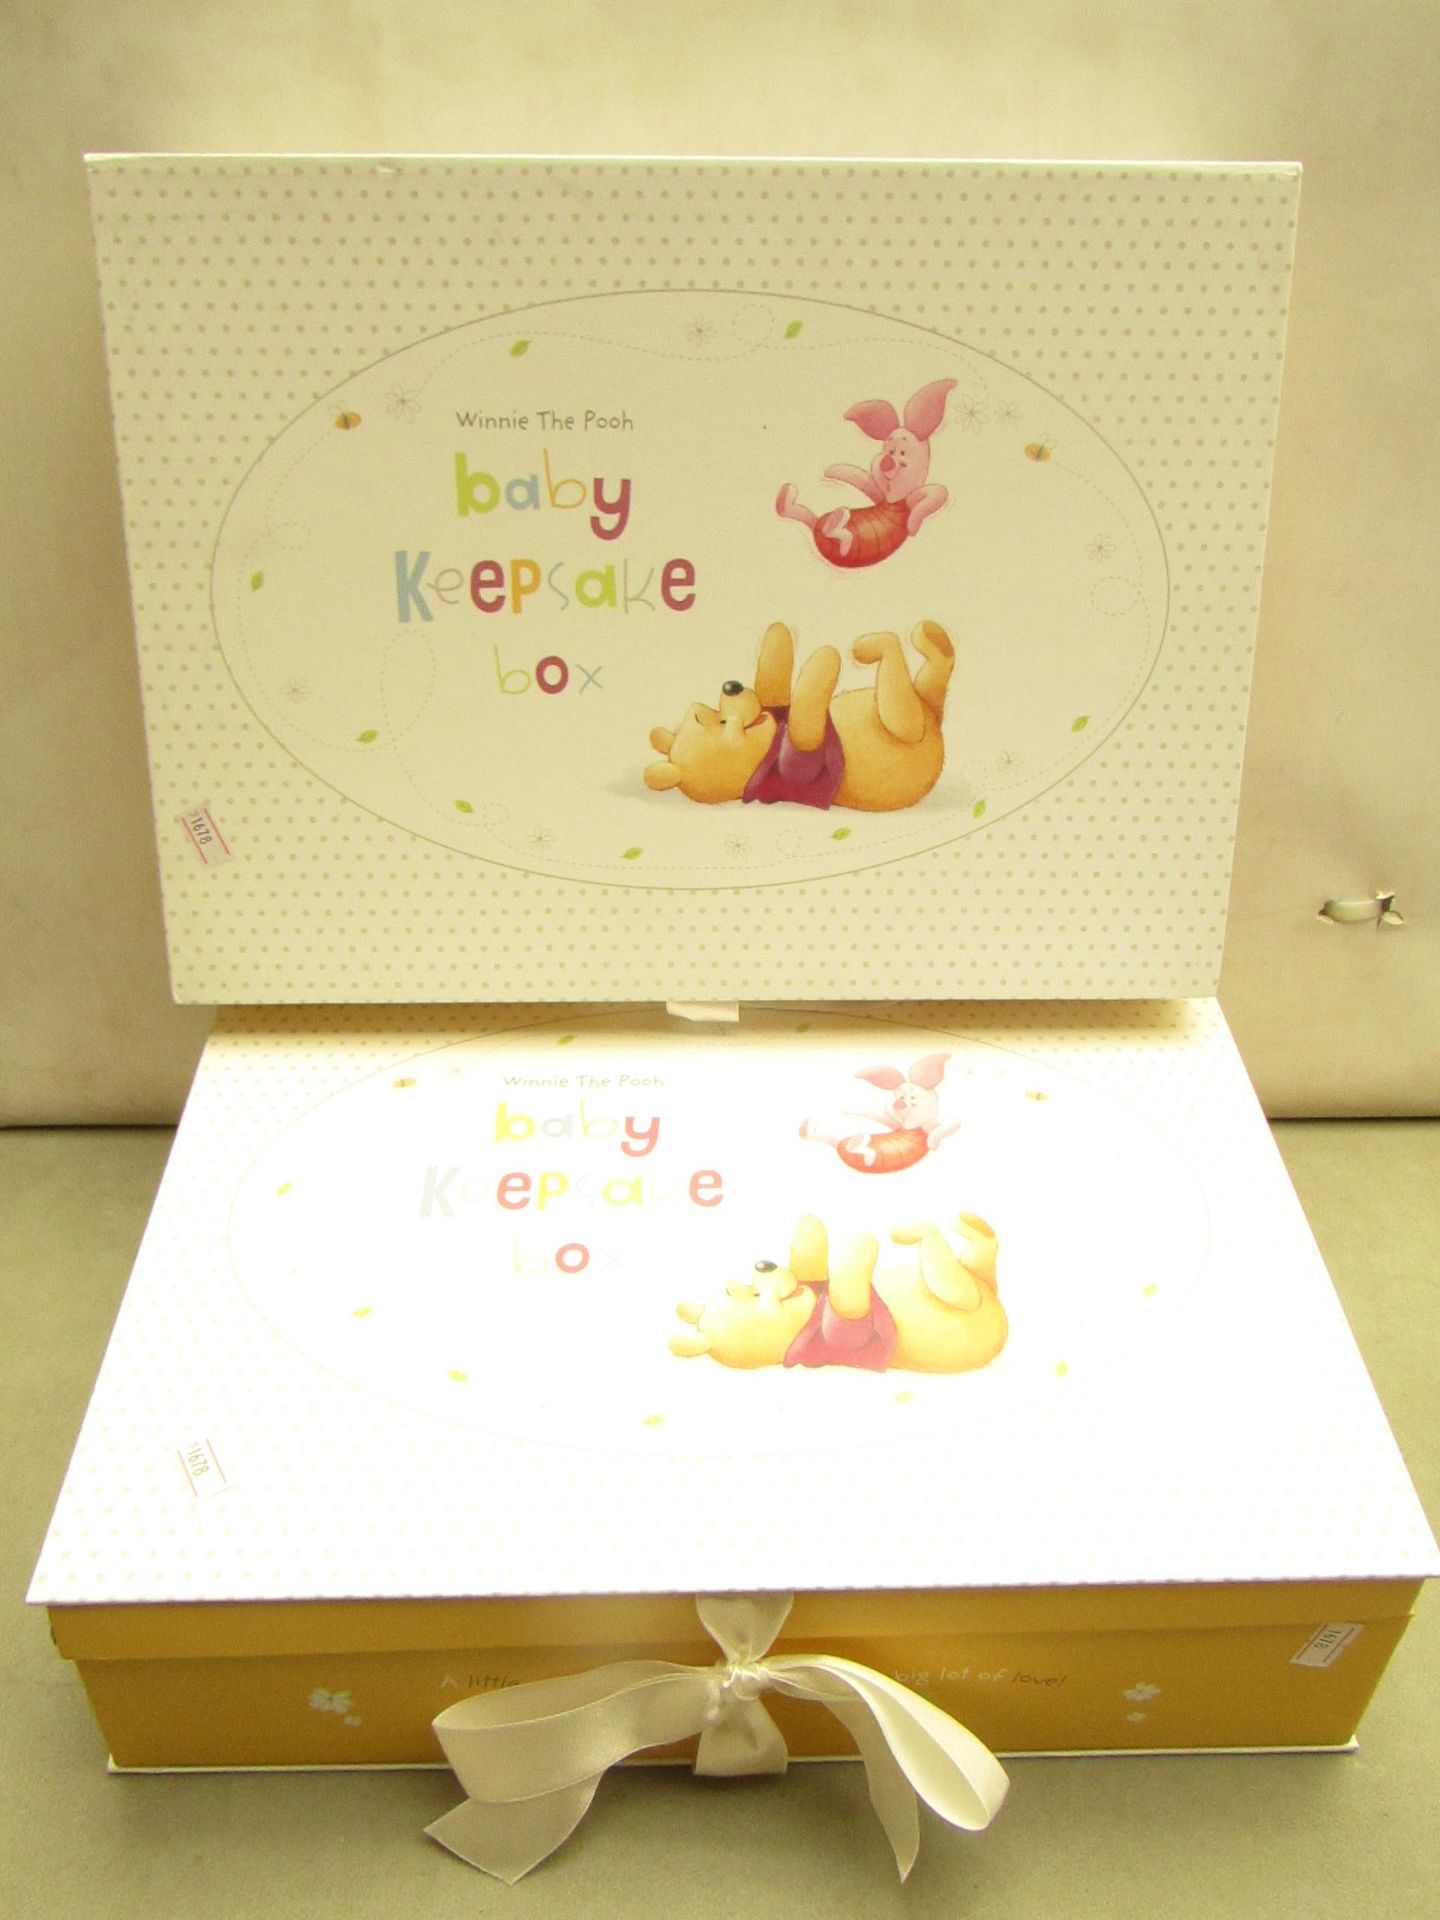 2 x Winnie the Pooh Baby Keep Sake Boxes. New